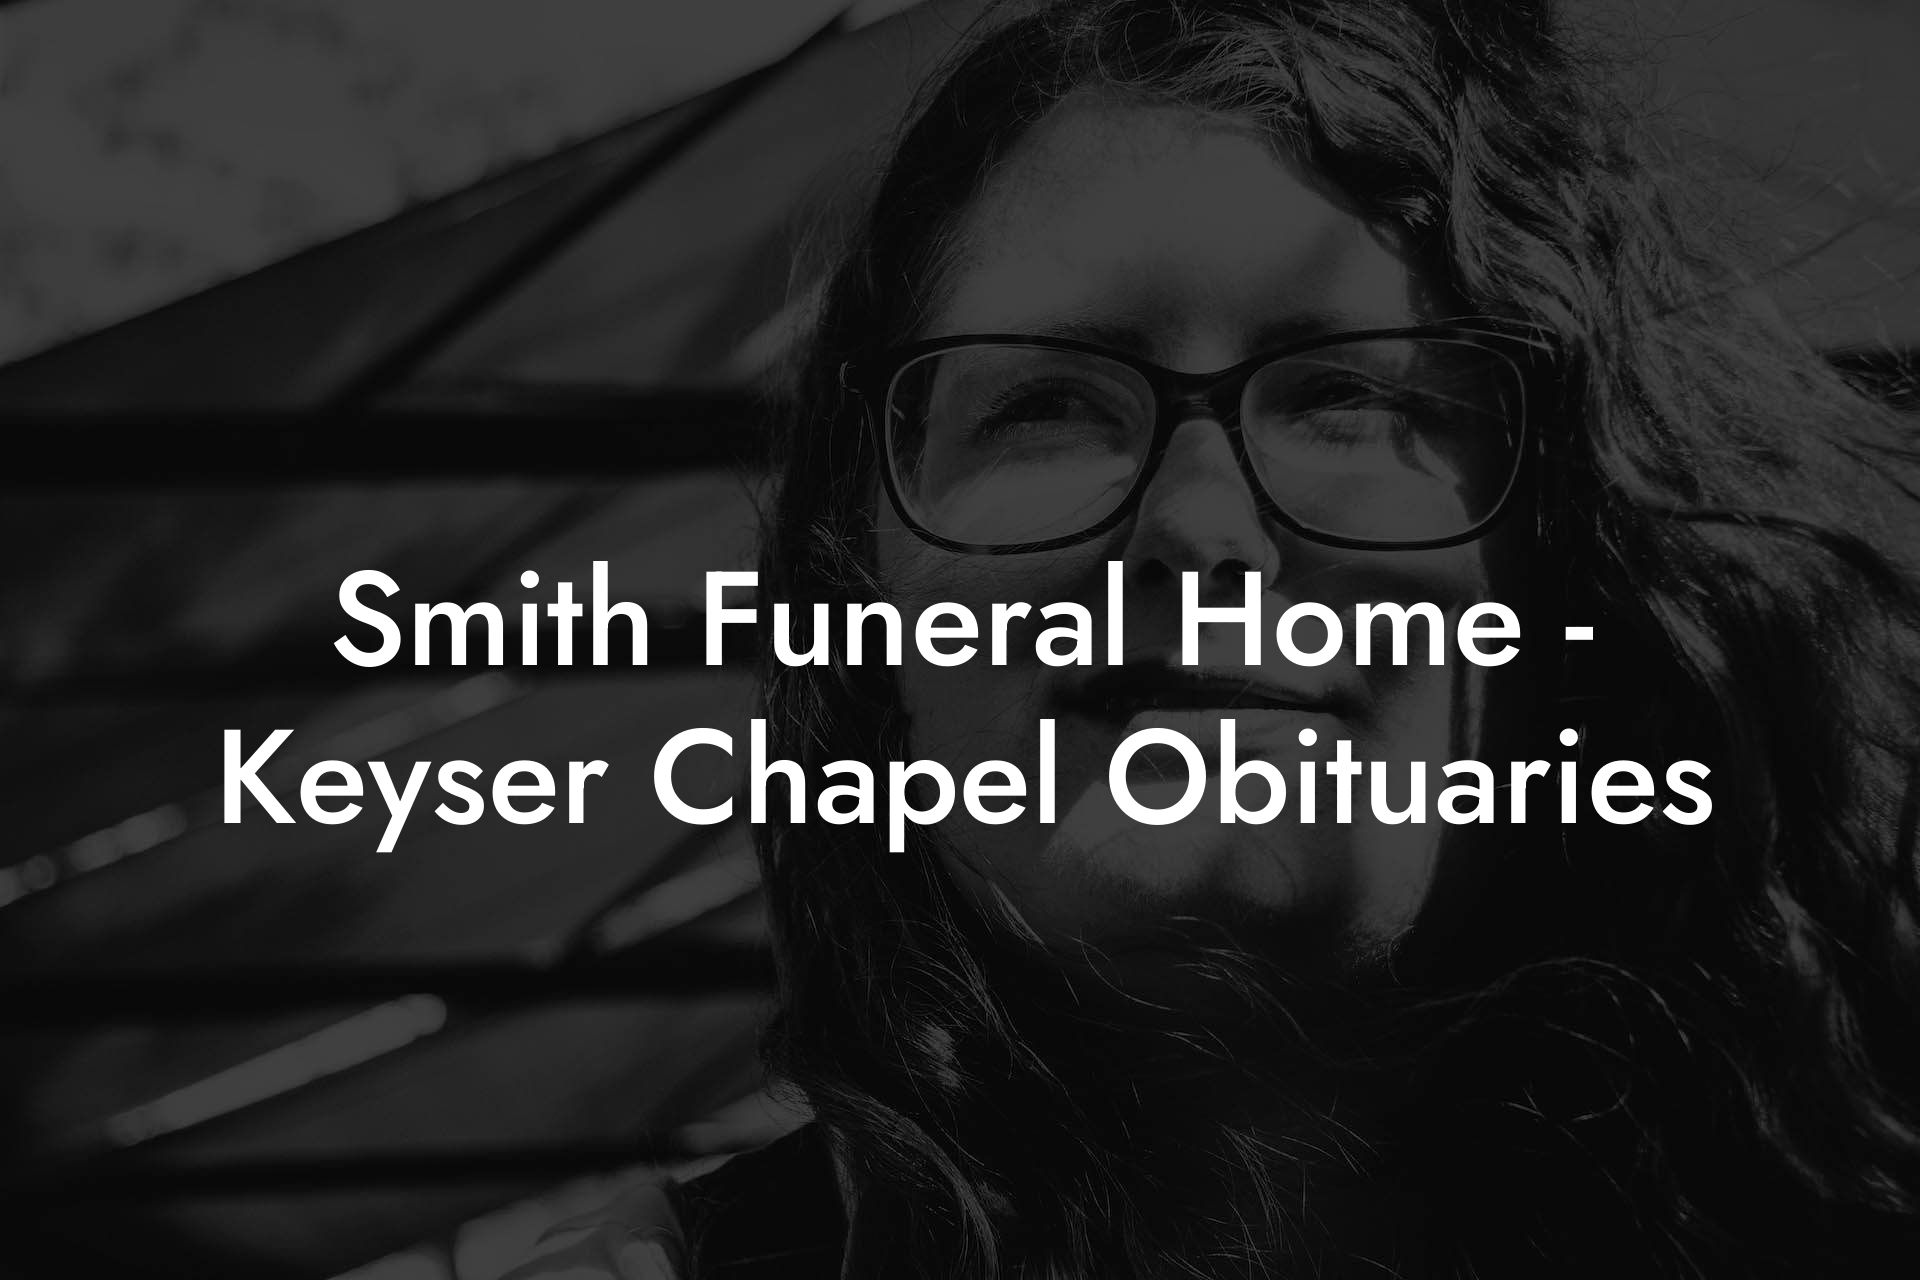 Smith Funeral Home - Keyser Chapel Obituaries